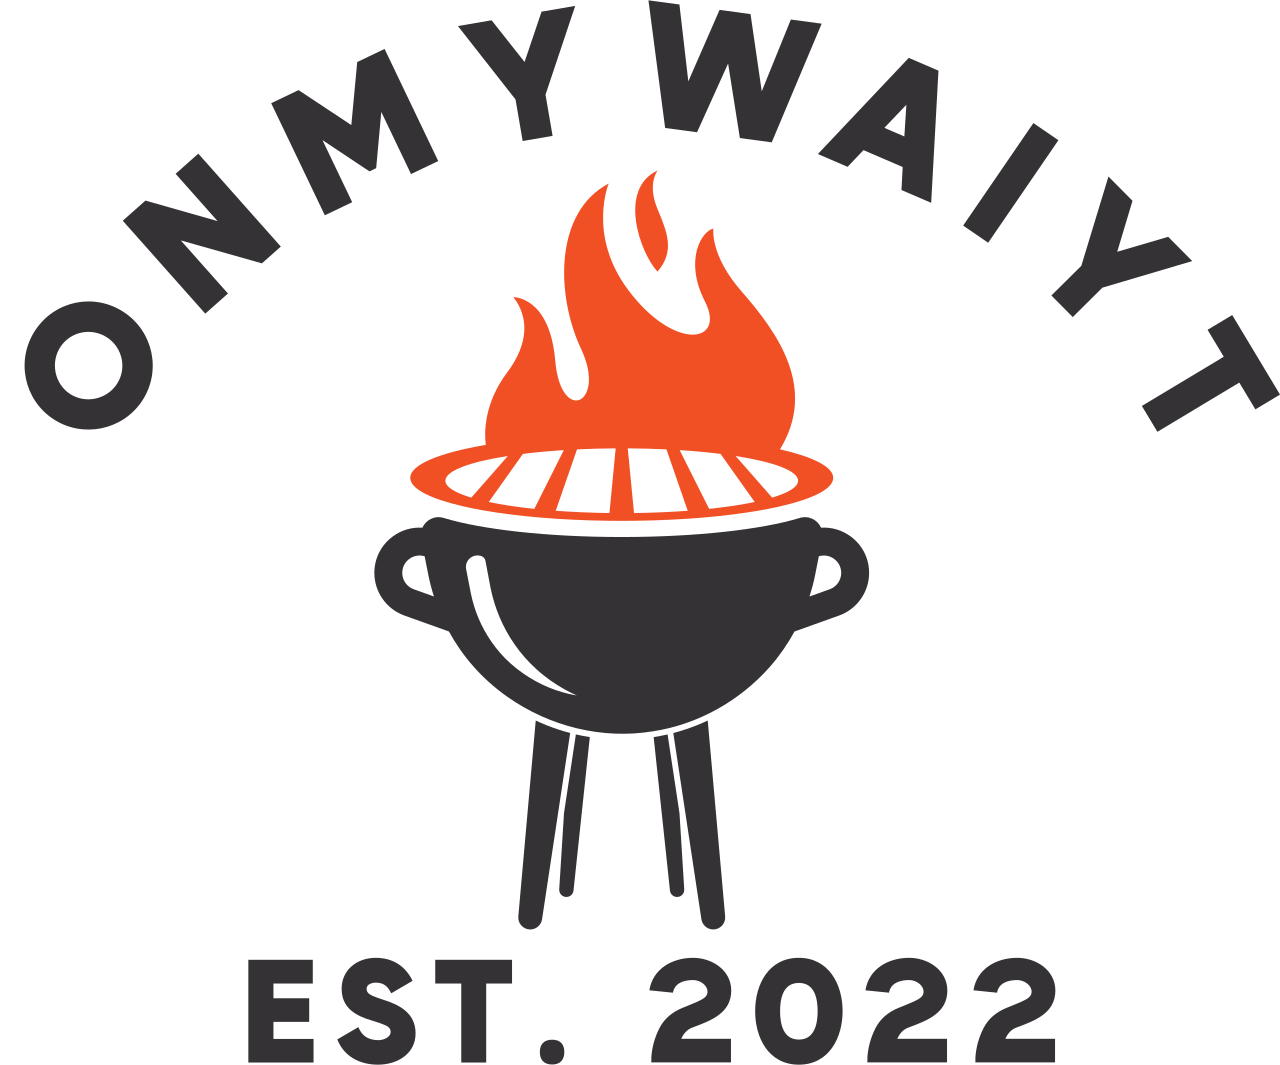 OnMyWaiyt's logo